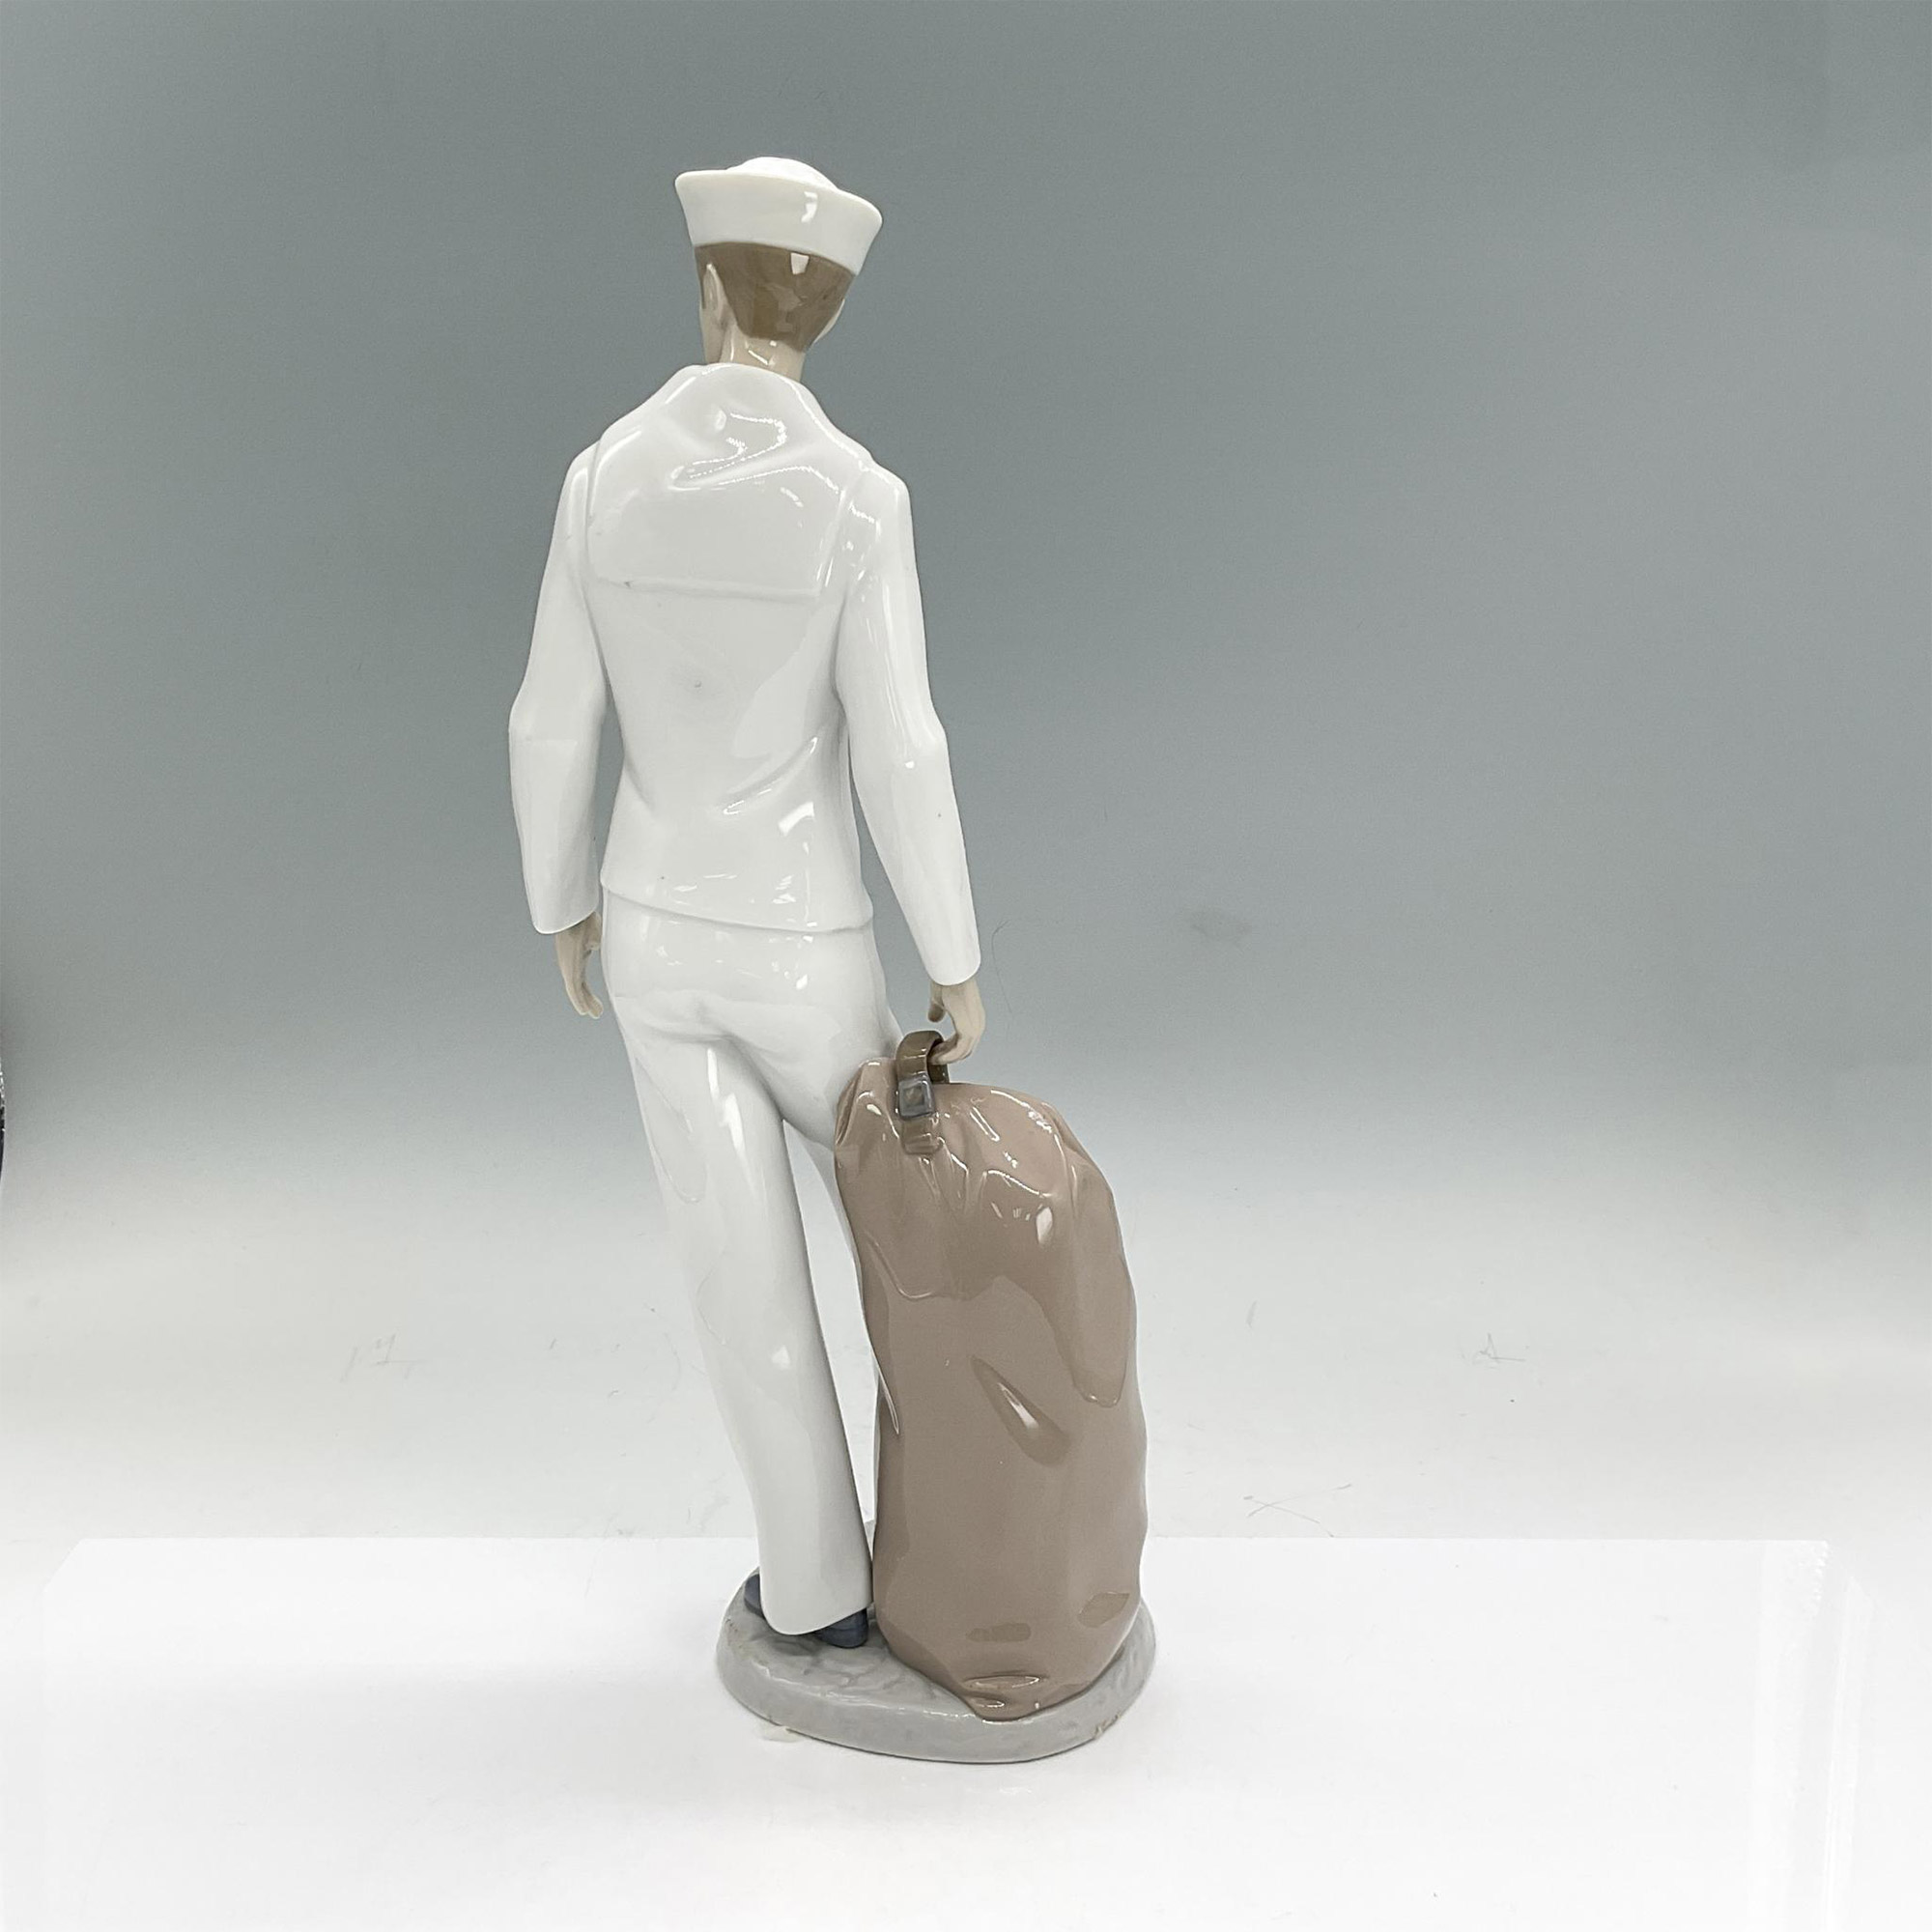 On Shore Leave 1006654 - Lladro Porcelain Figurine - Image 2 of 4